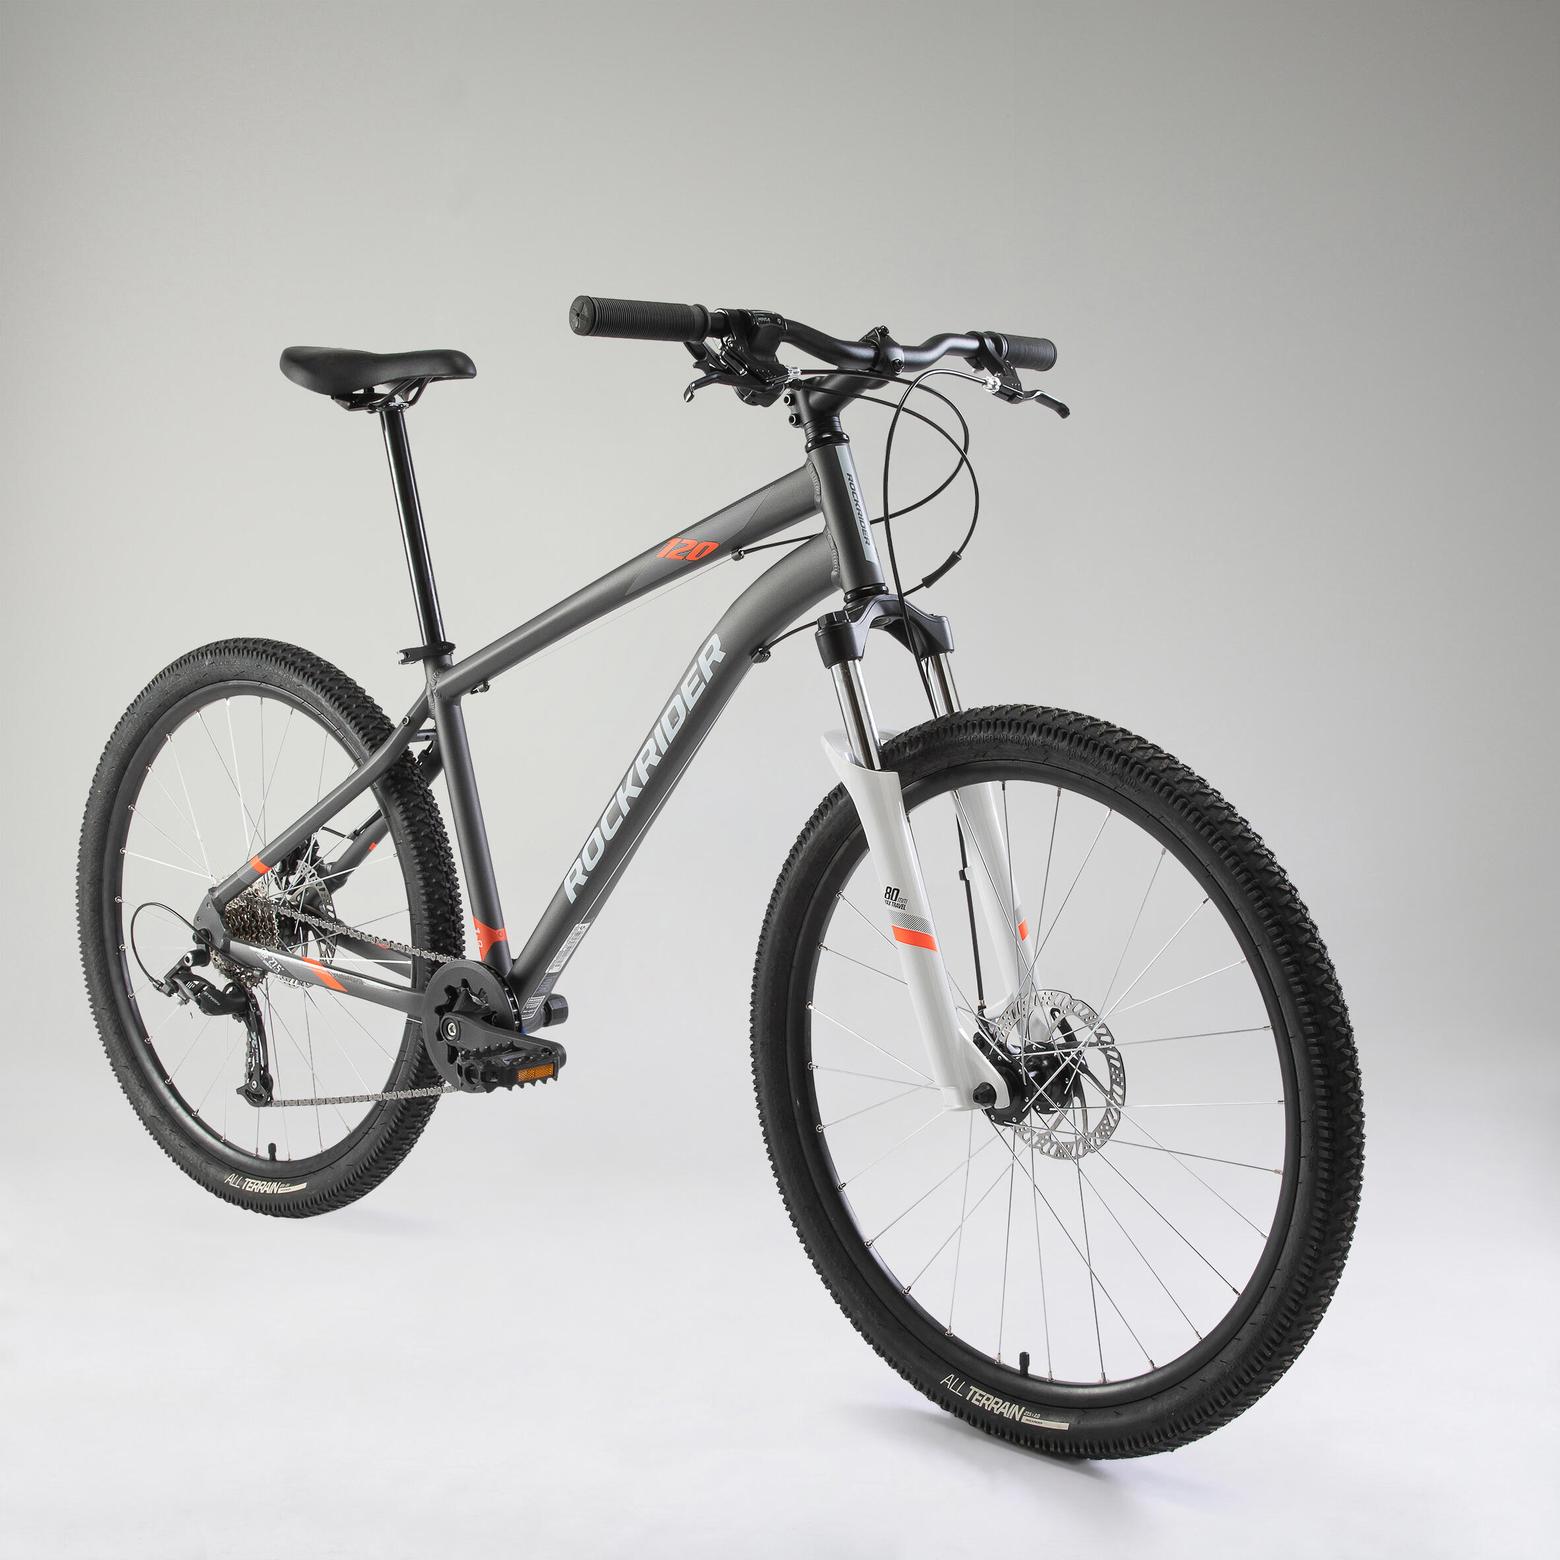 27.5" Mountain Bike - ST 120 Grey/Orange offers at $490 in Decathlon